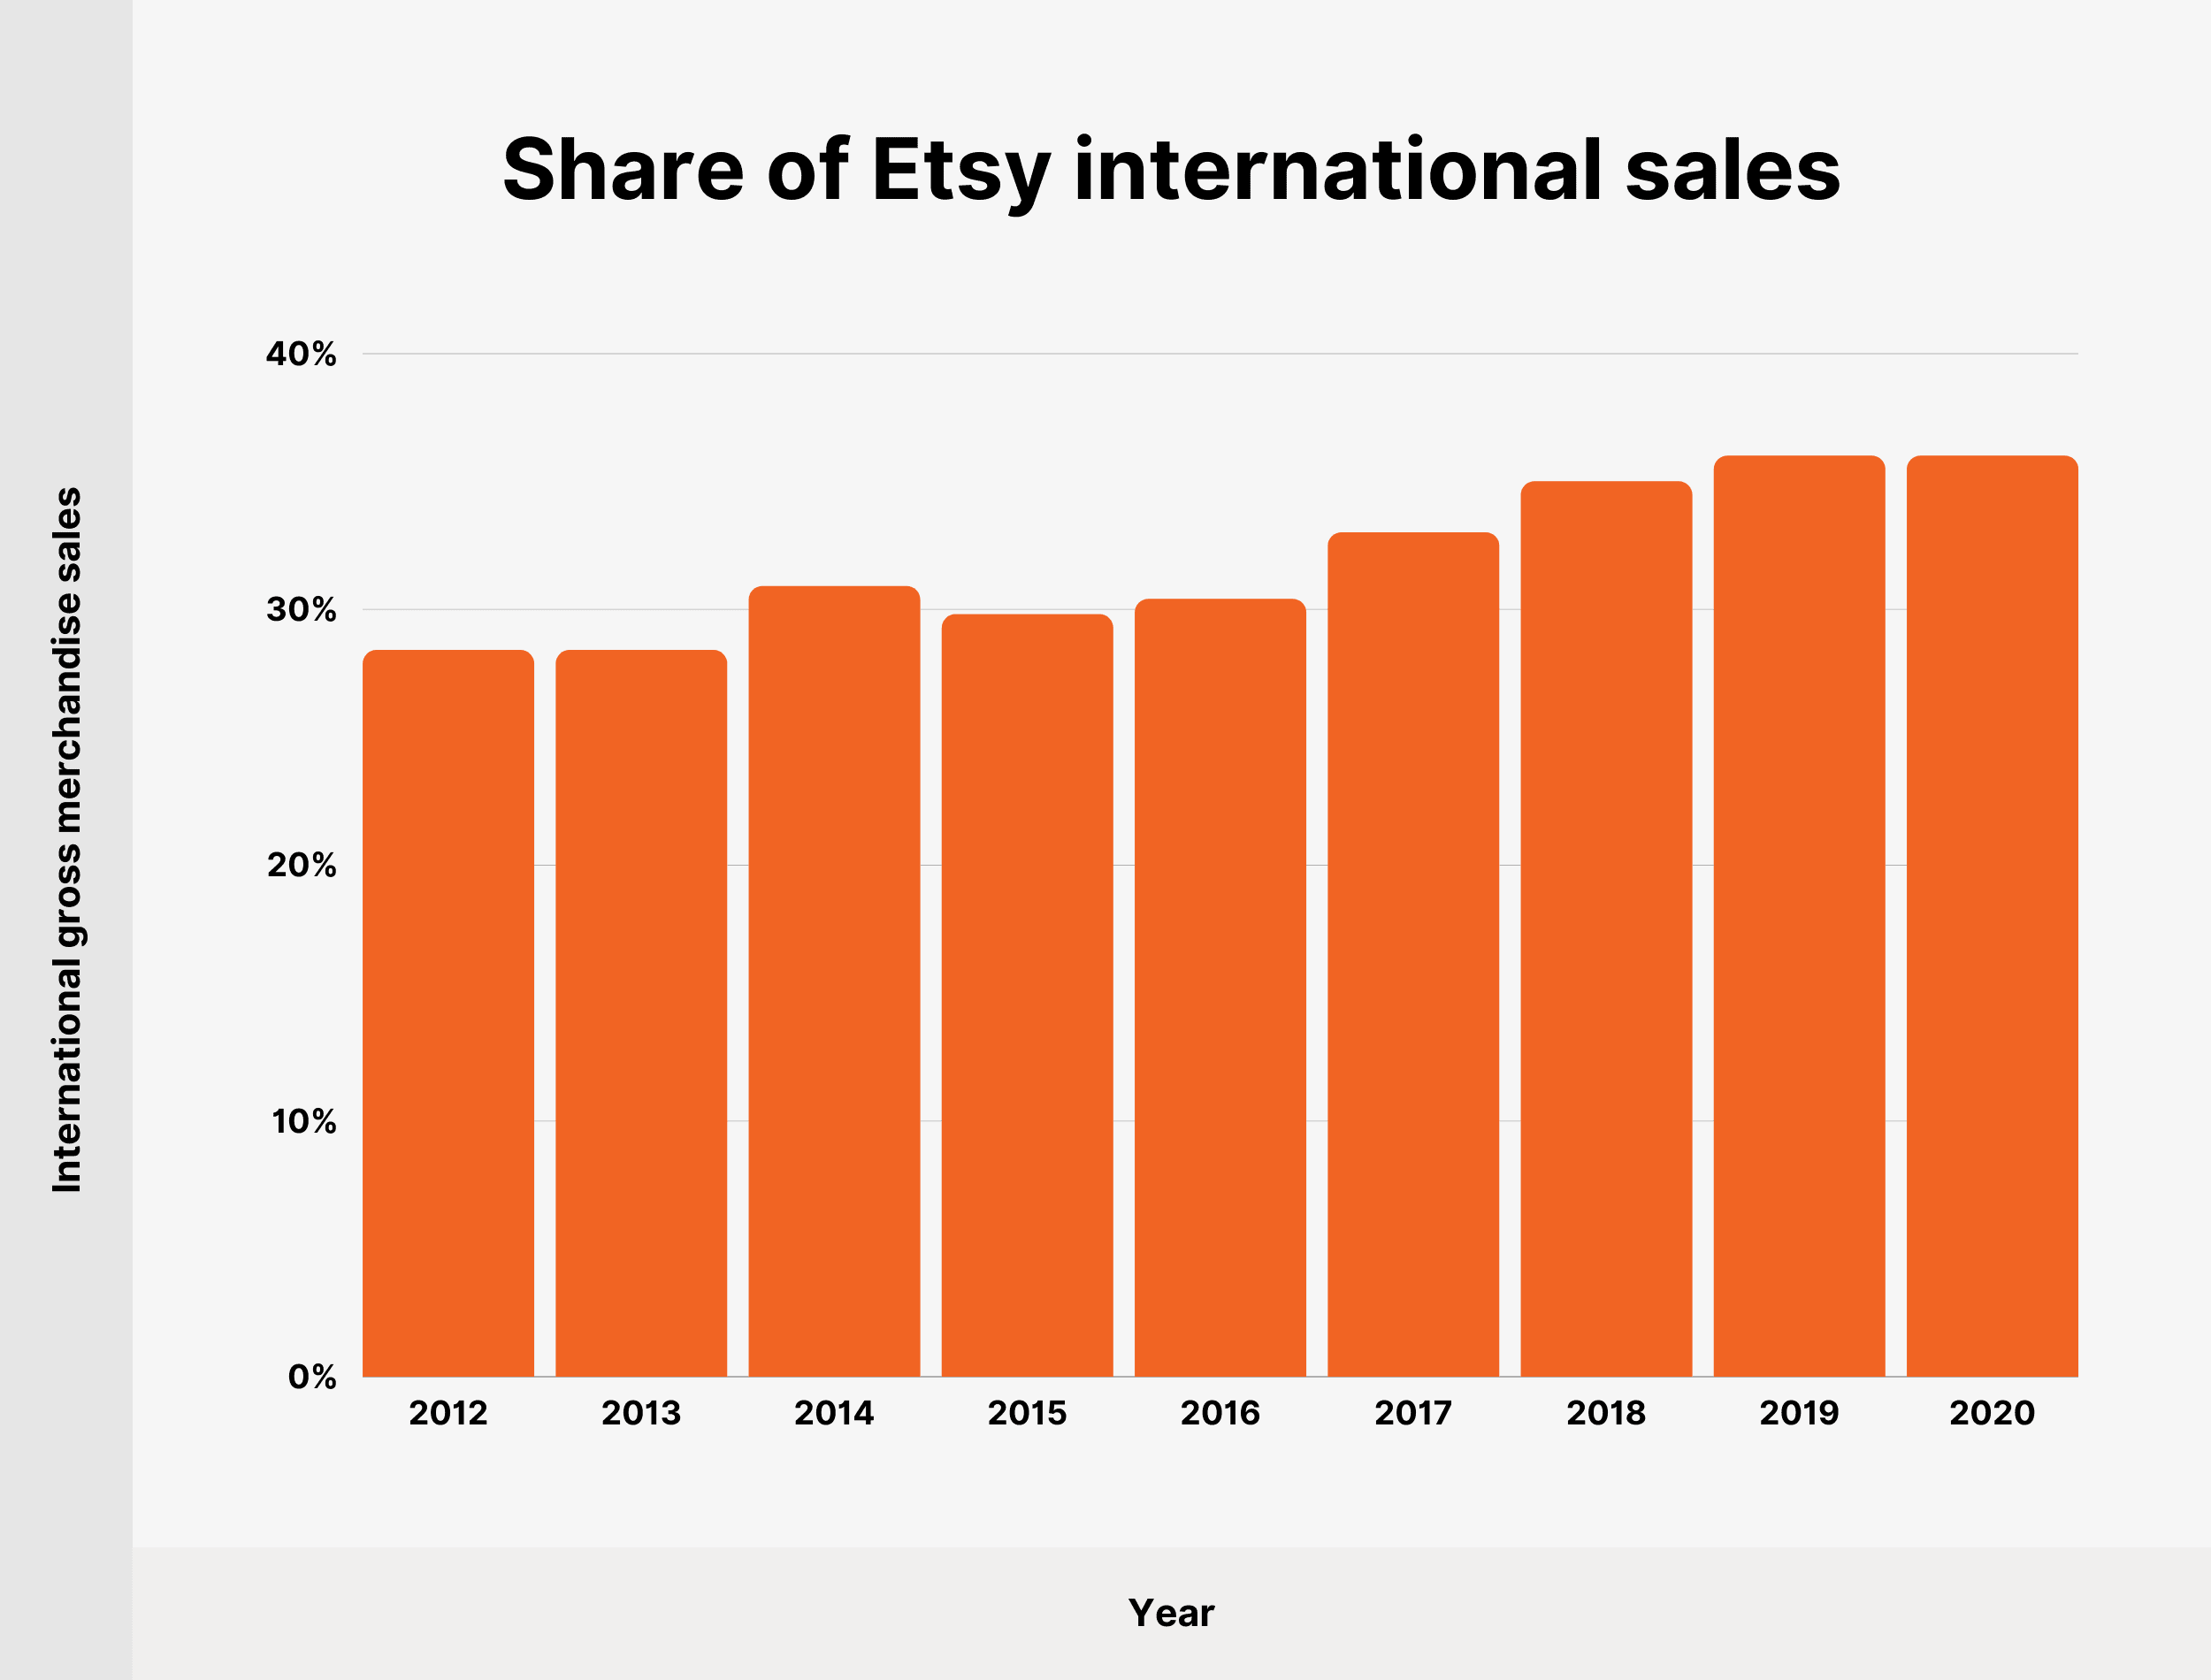 Share of Etsy international sales